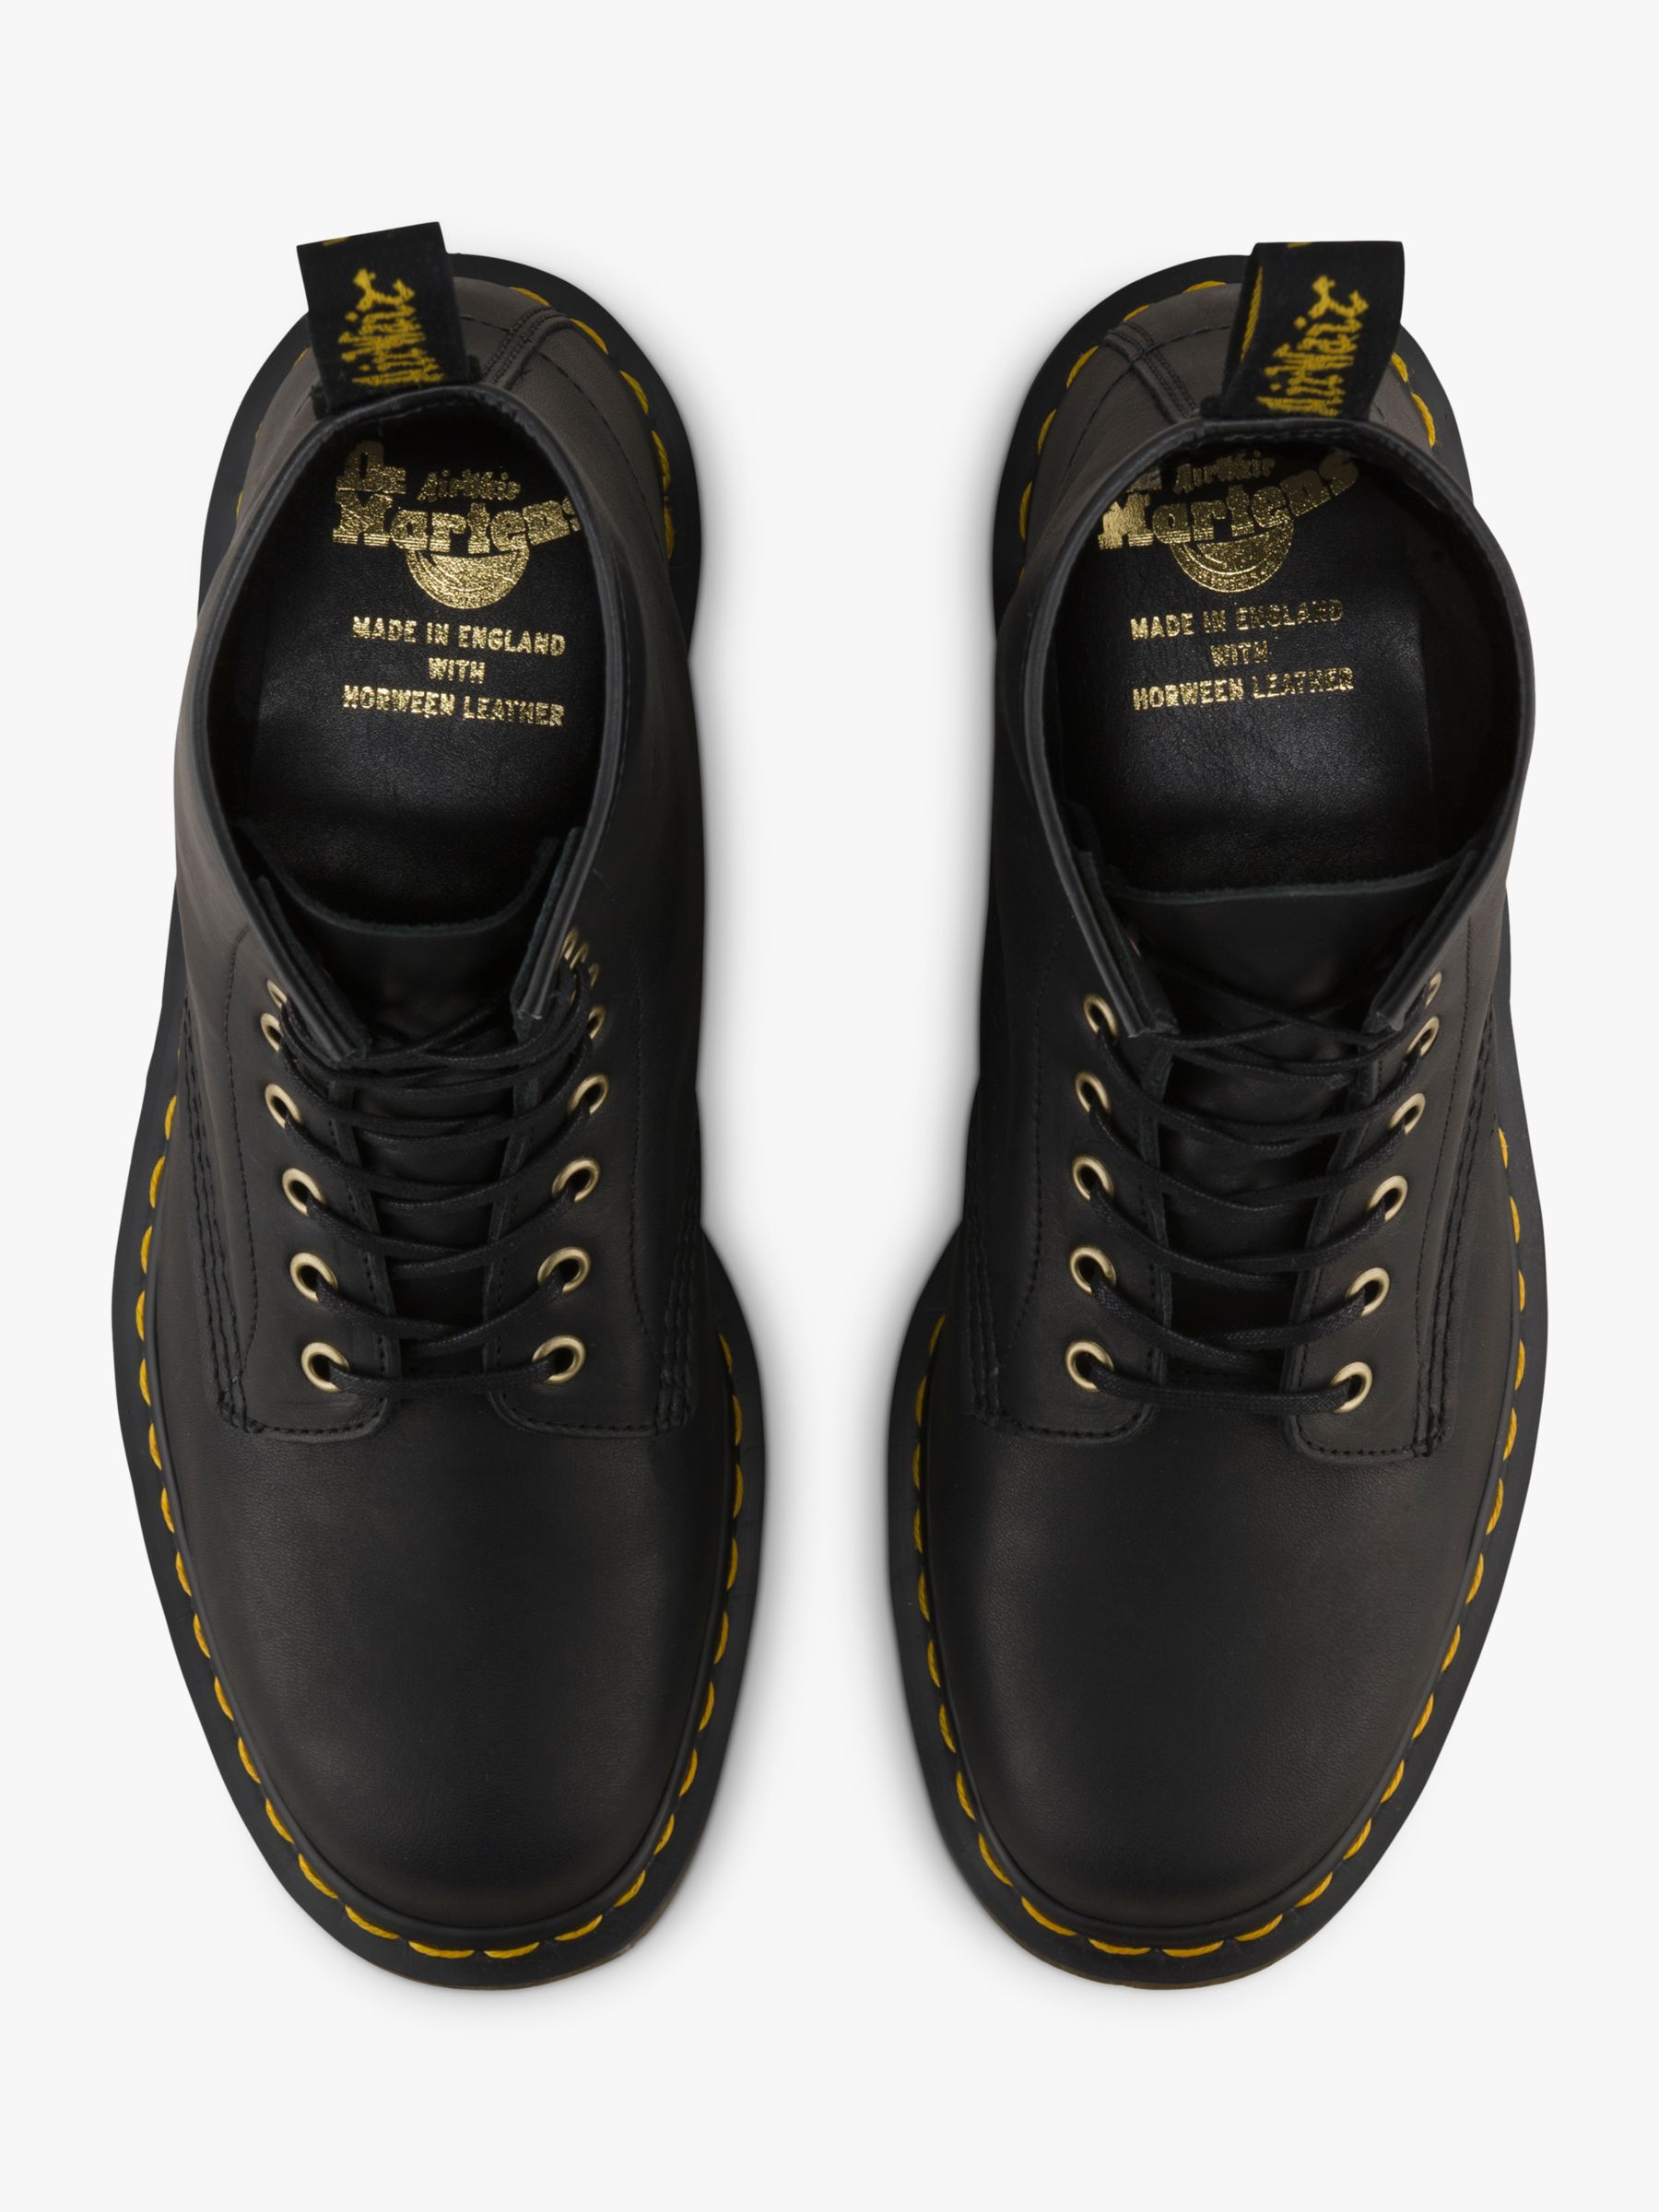 Dr Martens 1460 Dublin Boots, Black at John Lewis & Partners